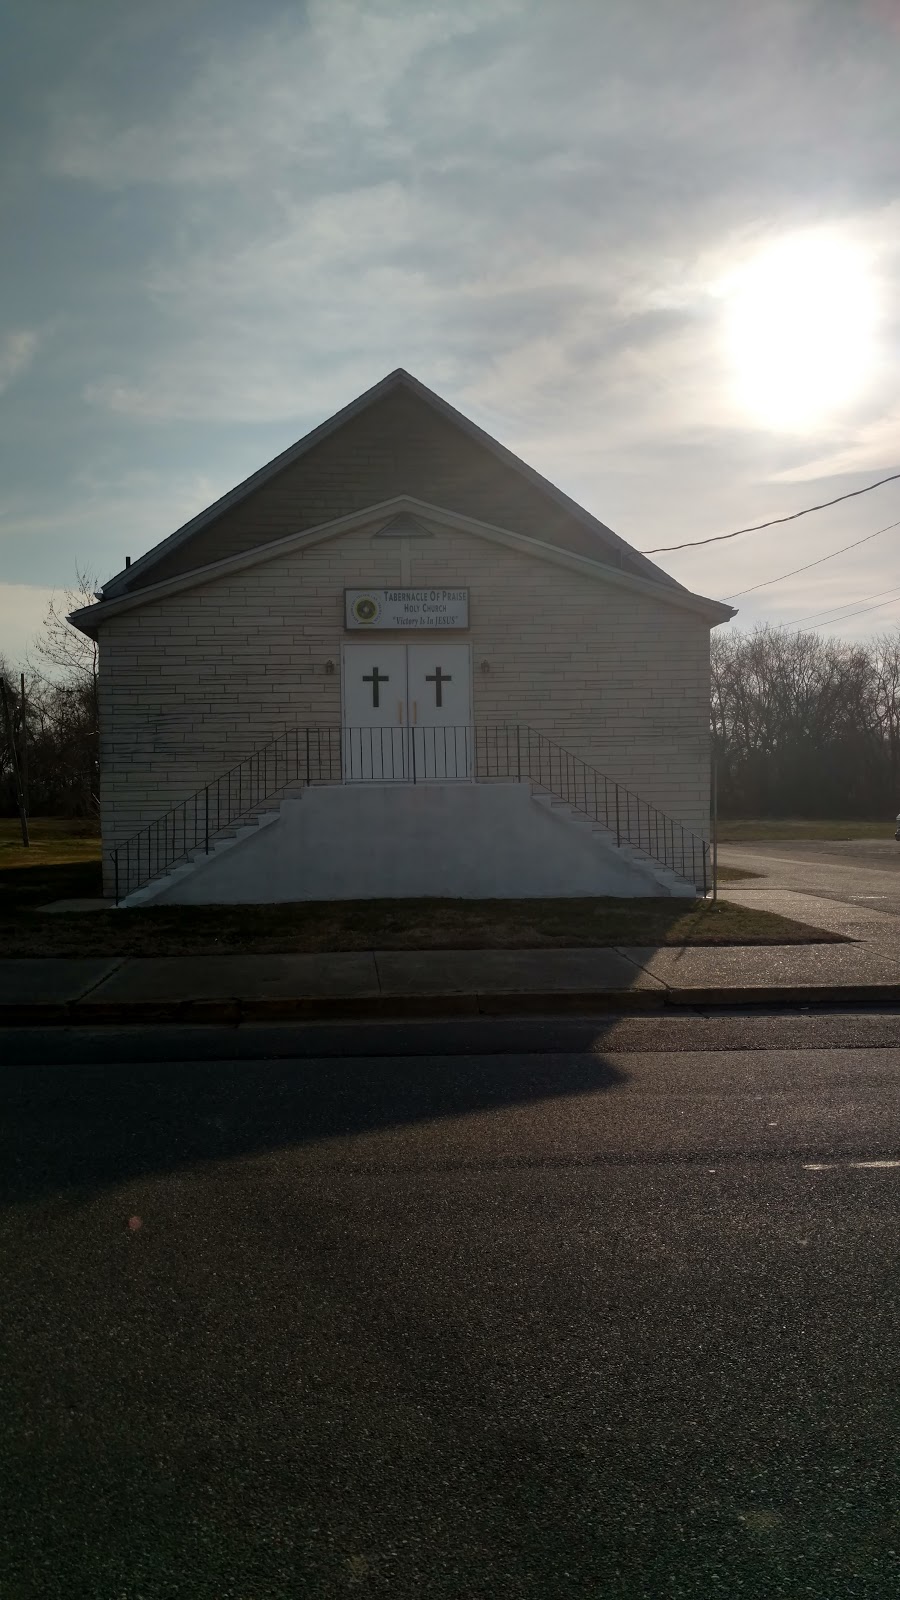 Tabernacle of Praise Holy Church | 393 Magnolia St, Salem, NJ 08079 | Phone: (856) 935-3485